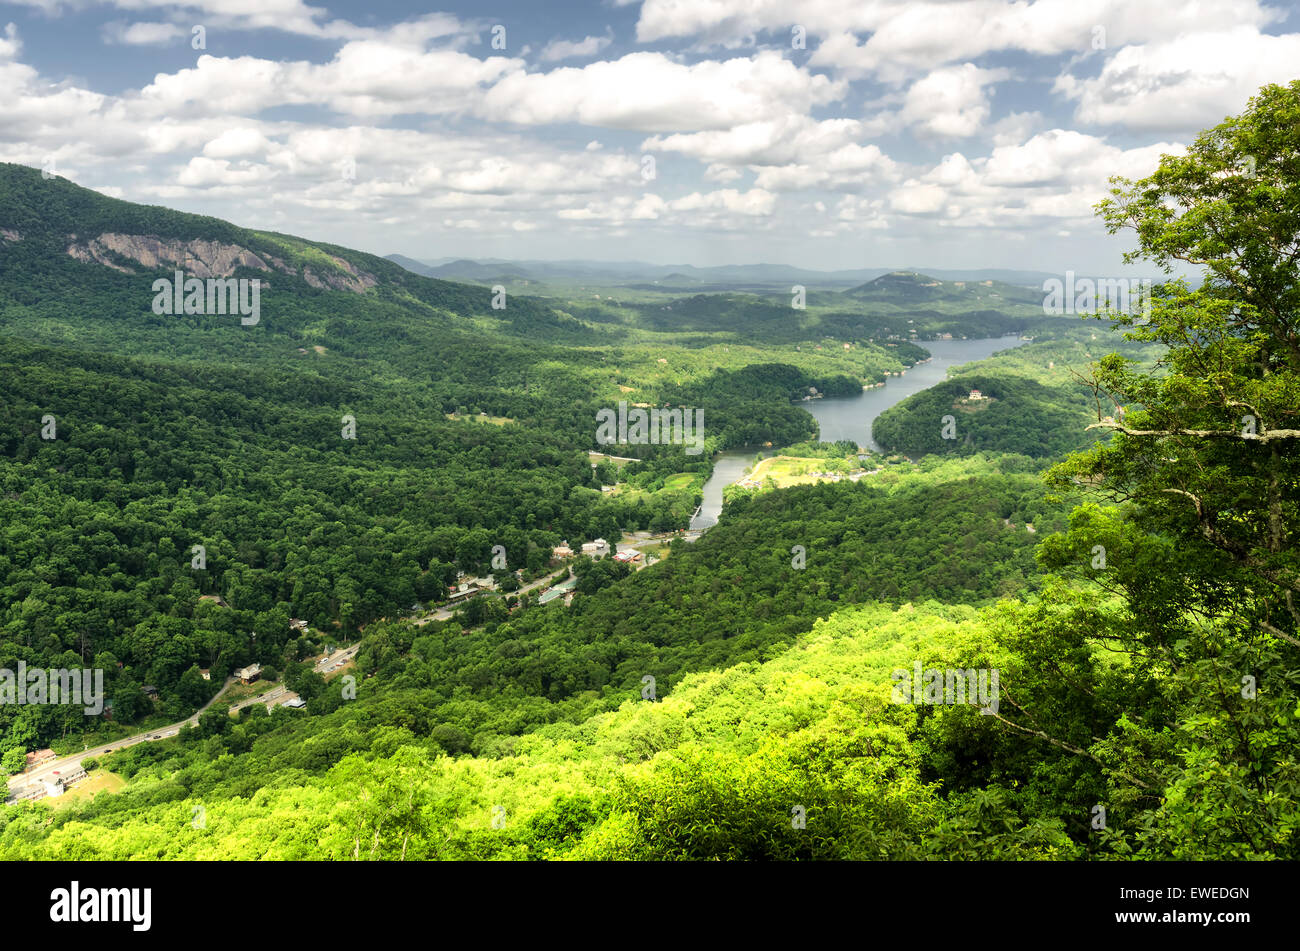 Overlook from chimney rock mountain, North Carolina, United States Stock Photo